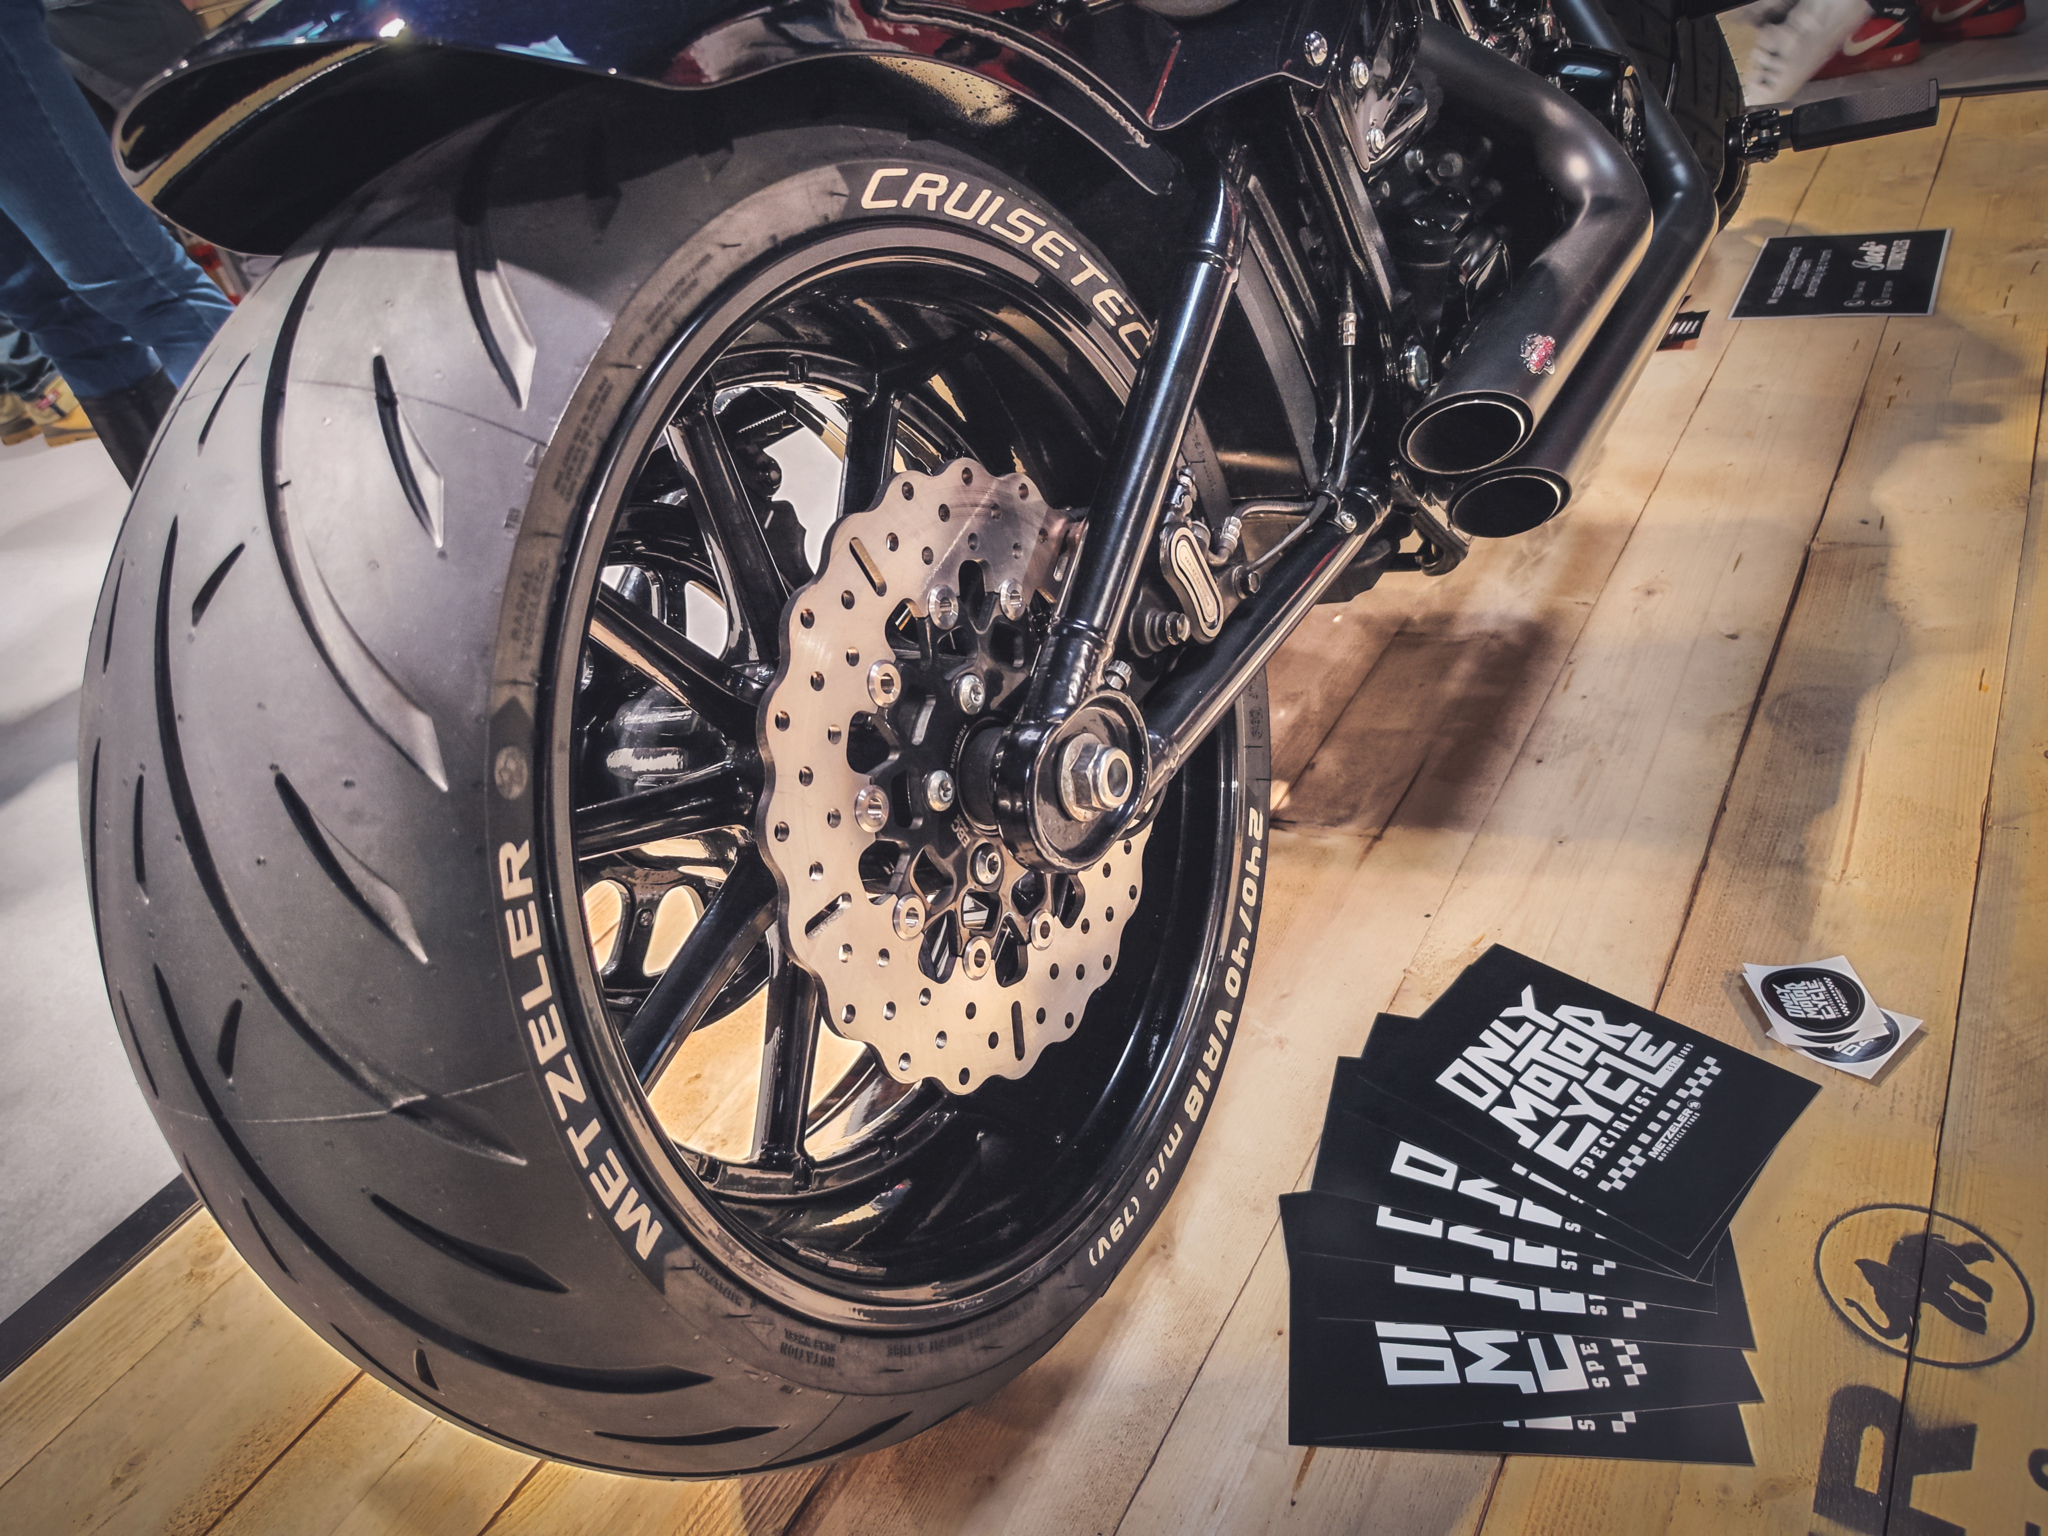 2021 Harley-Davidson Sportster S tire from Dunlop